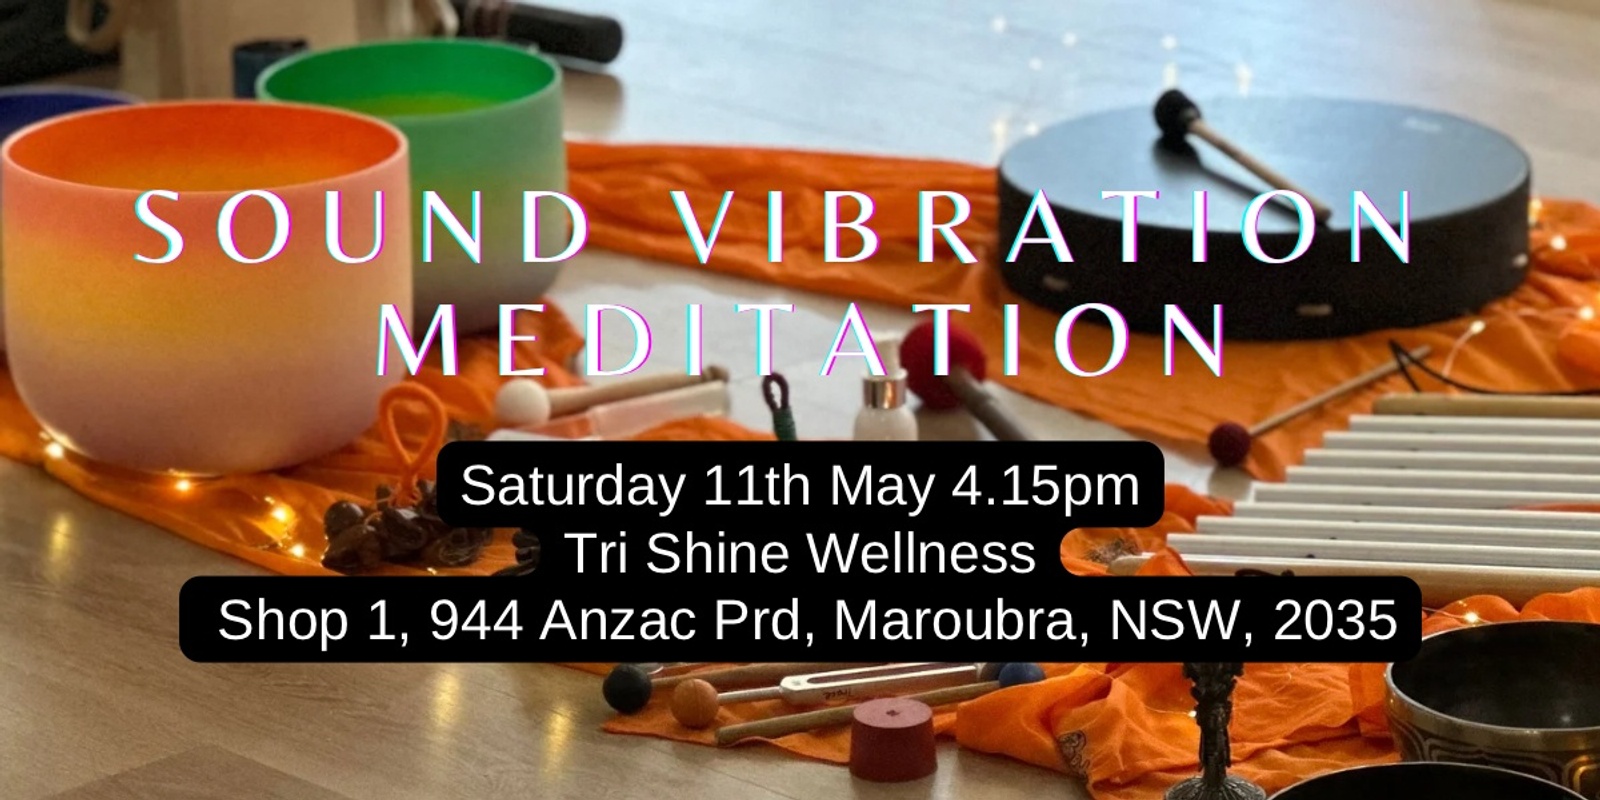 Banner image for Sound Vibration Meditation @ Tri Shine Wellness Maroubra Saturday 11th May 